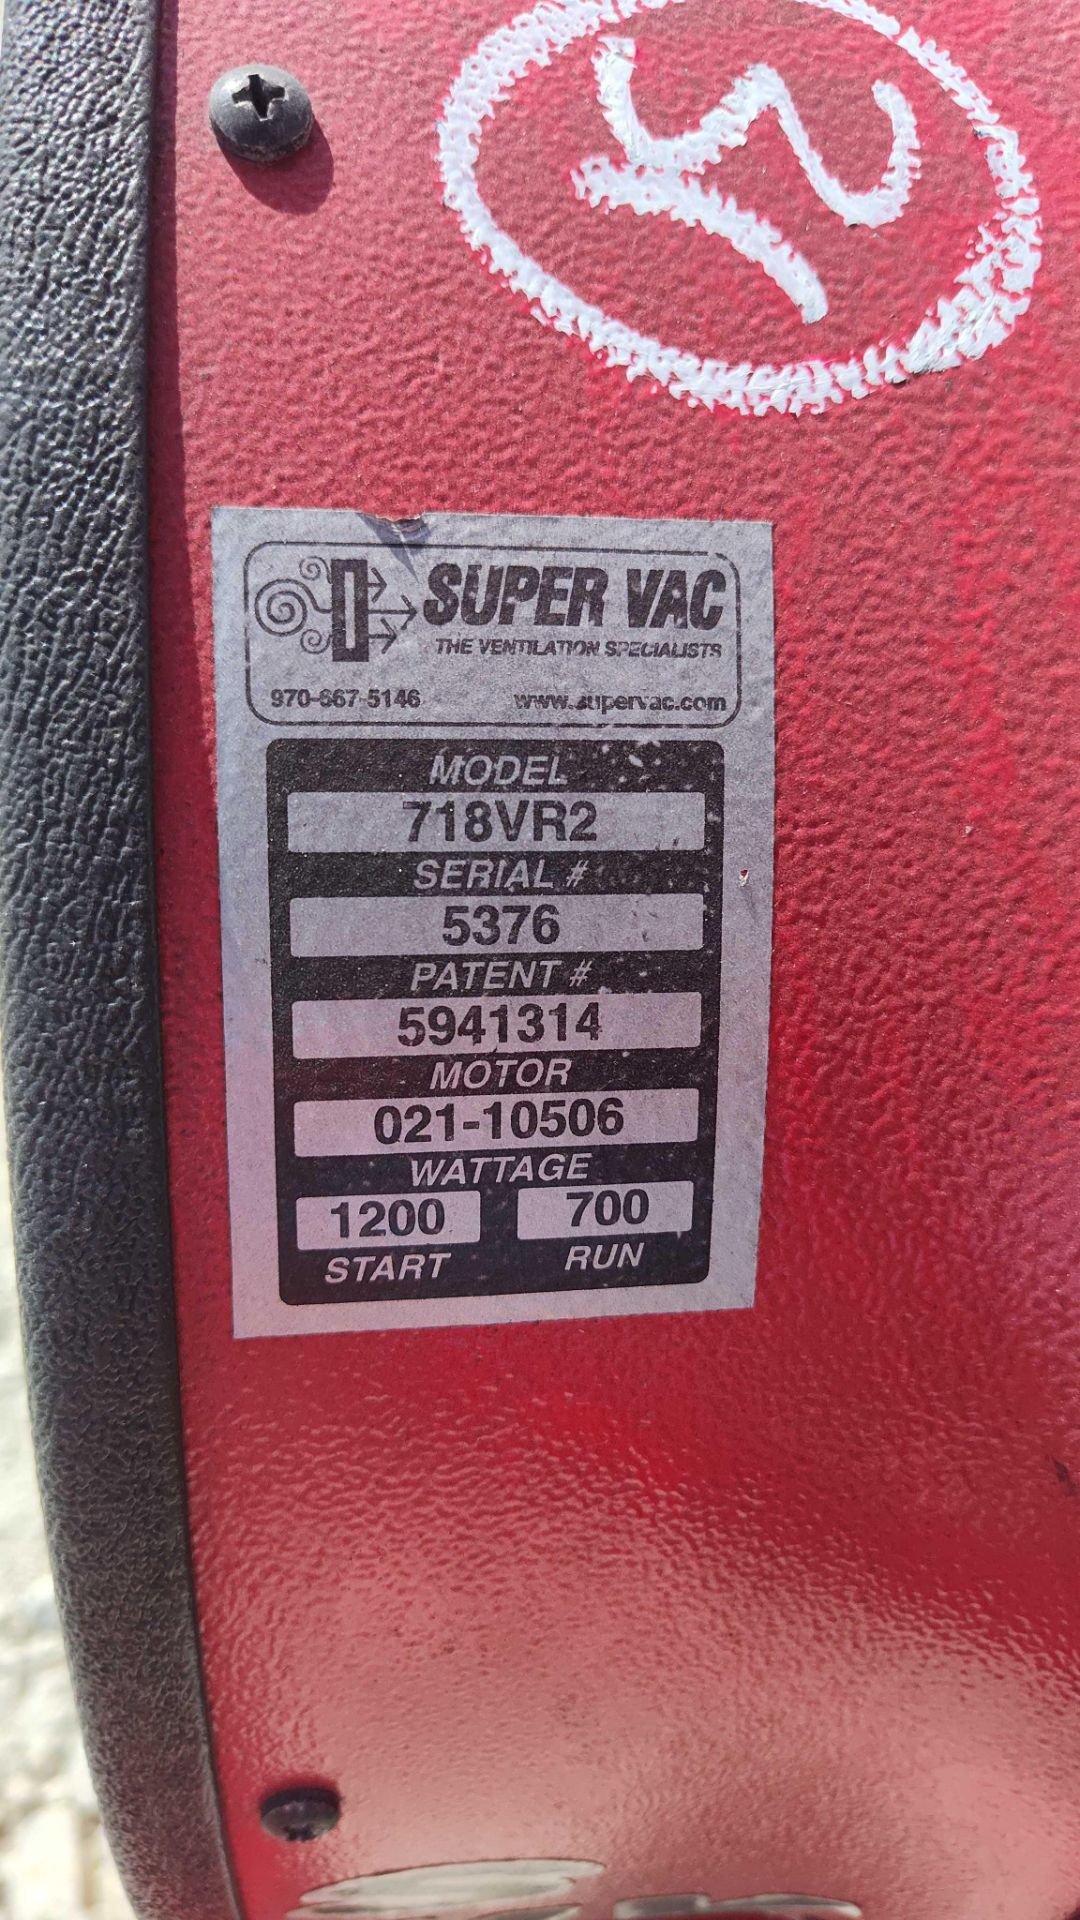 Super Vac 718VR2 Ventilation Fan - Image 5 of 8